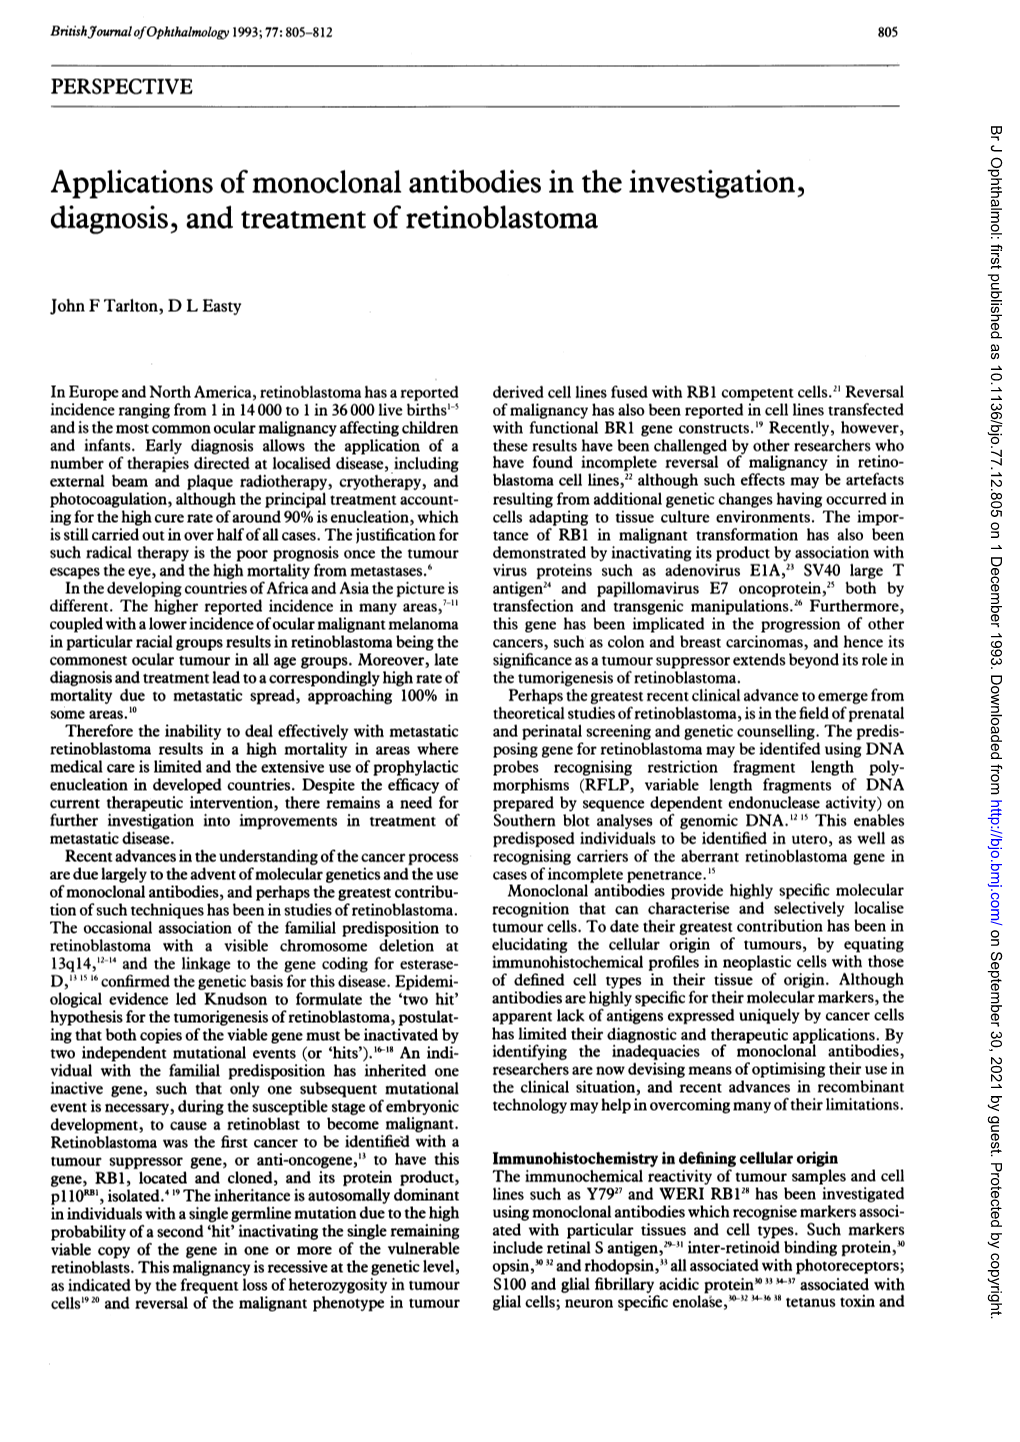 Diagnosis, and Treatment of Retinoblastoma